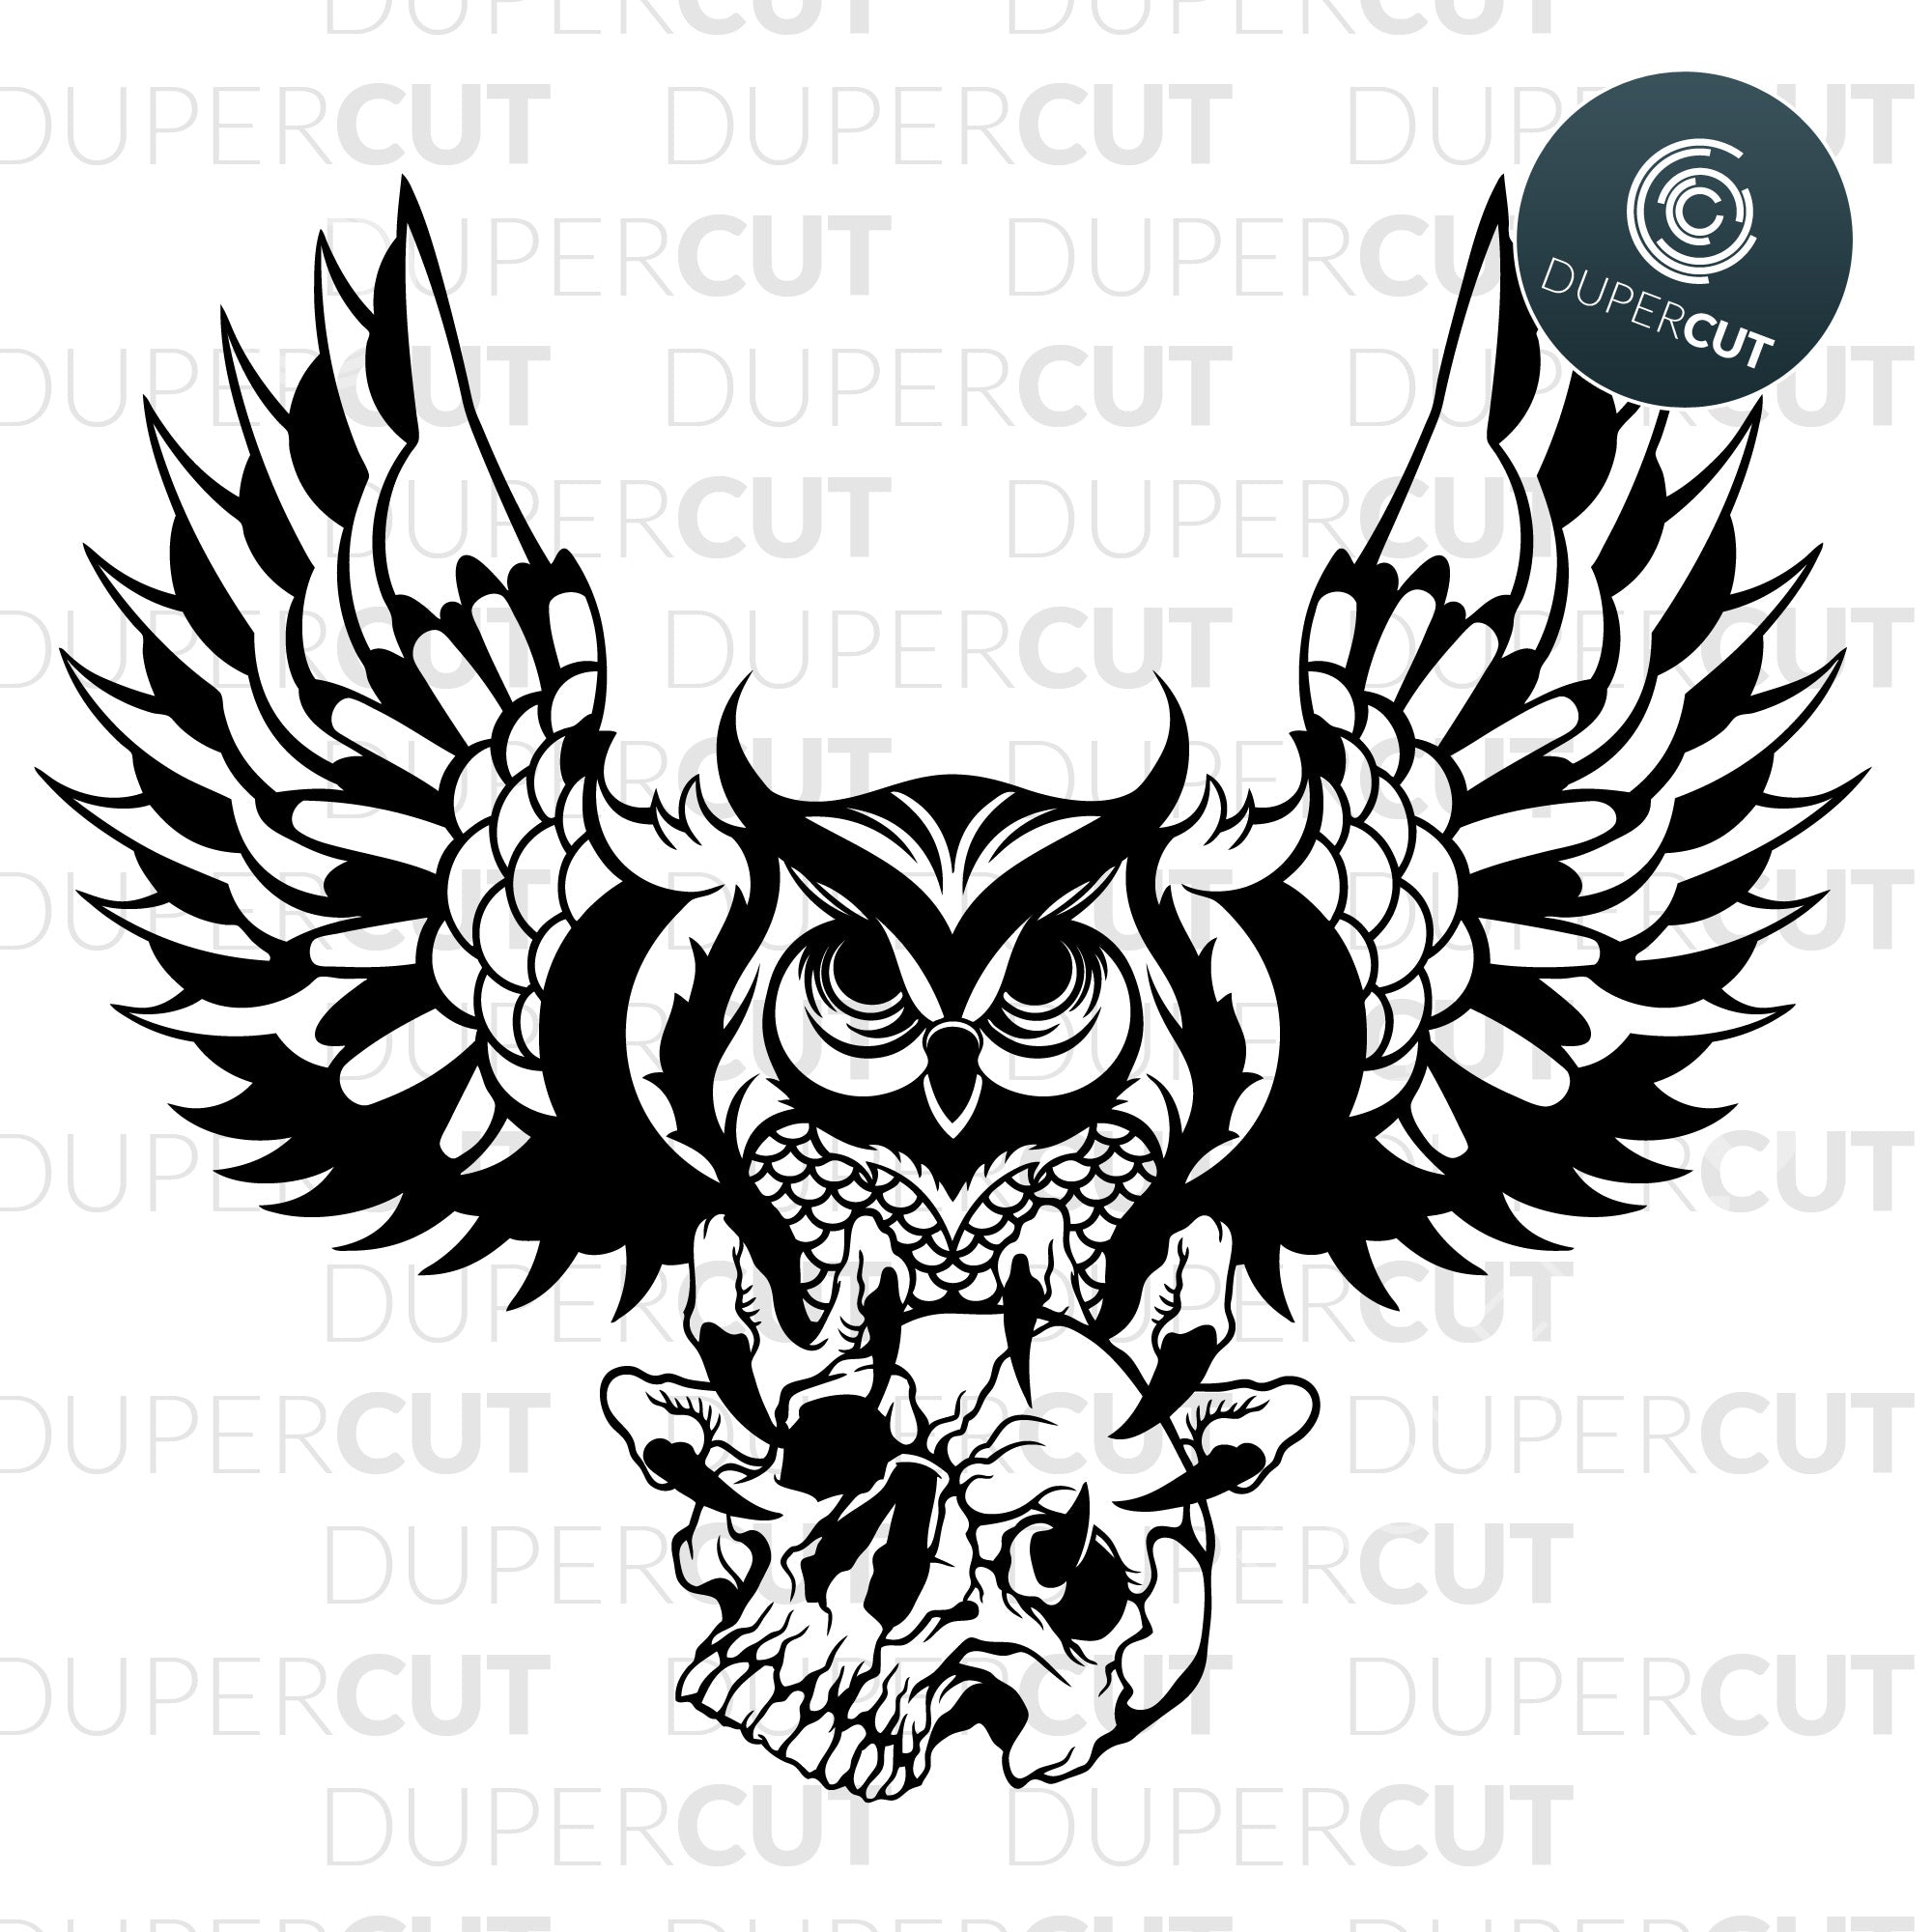 owl and skull tattoo